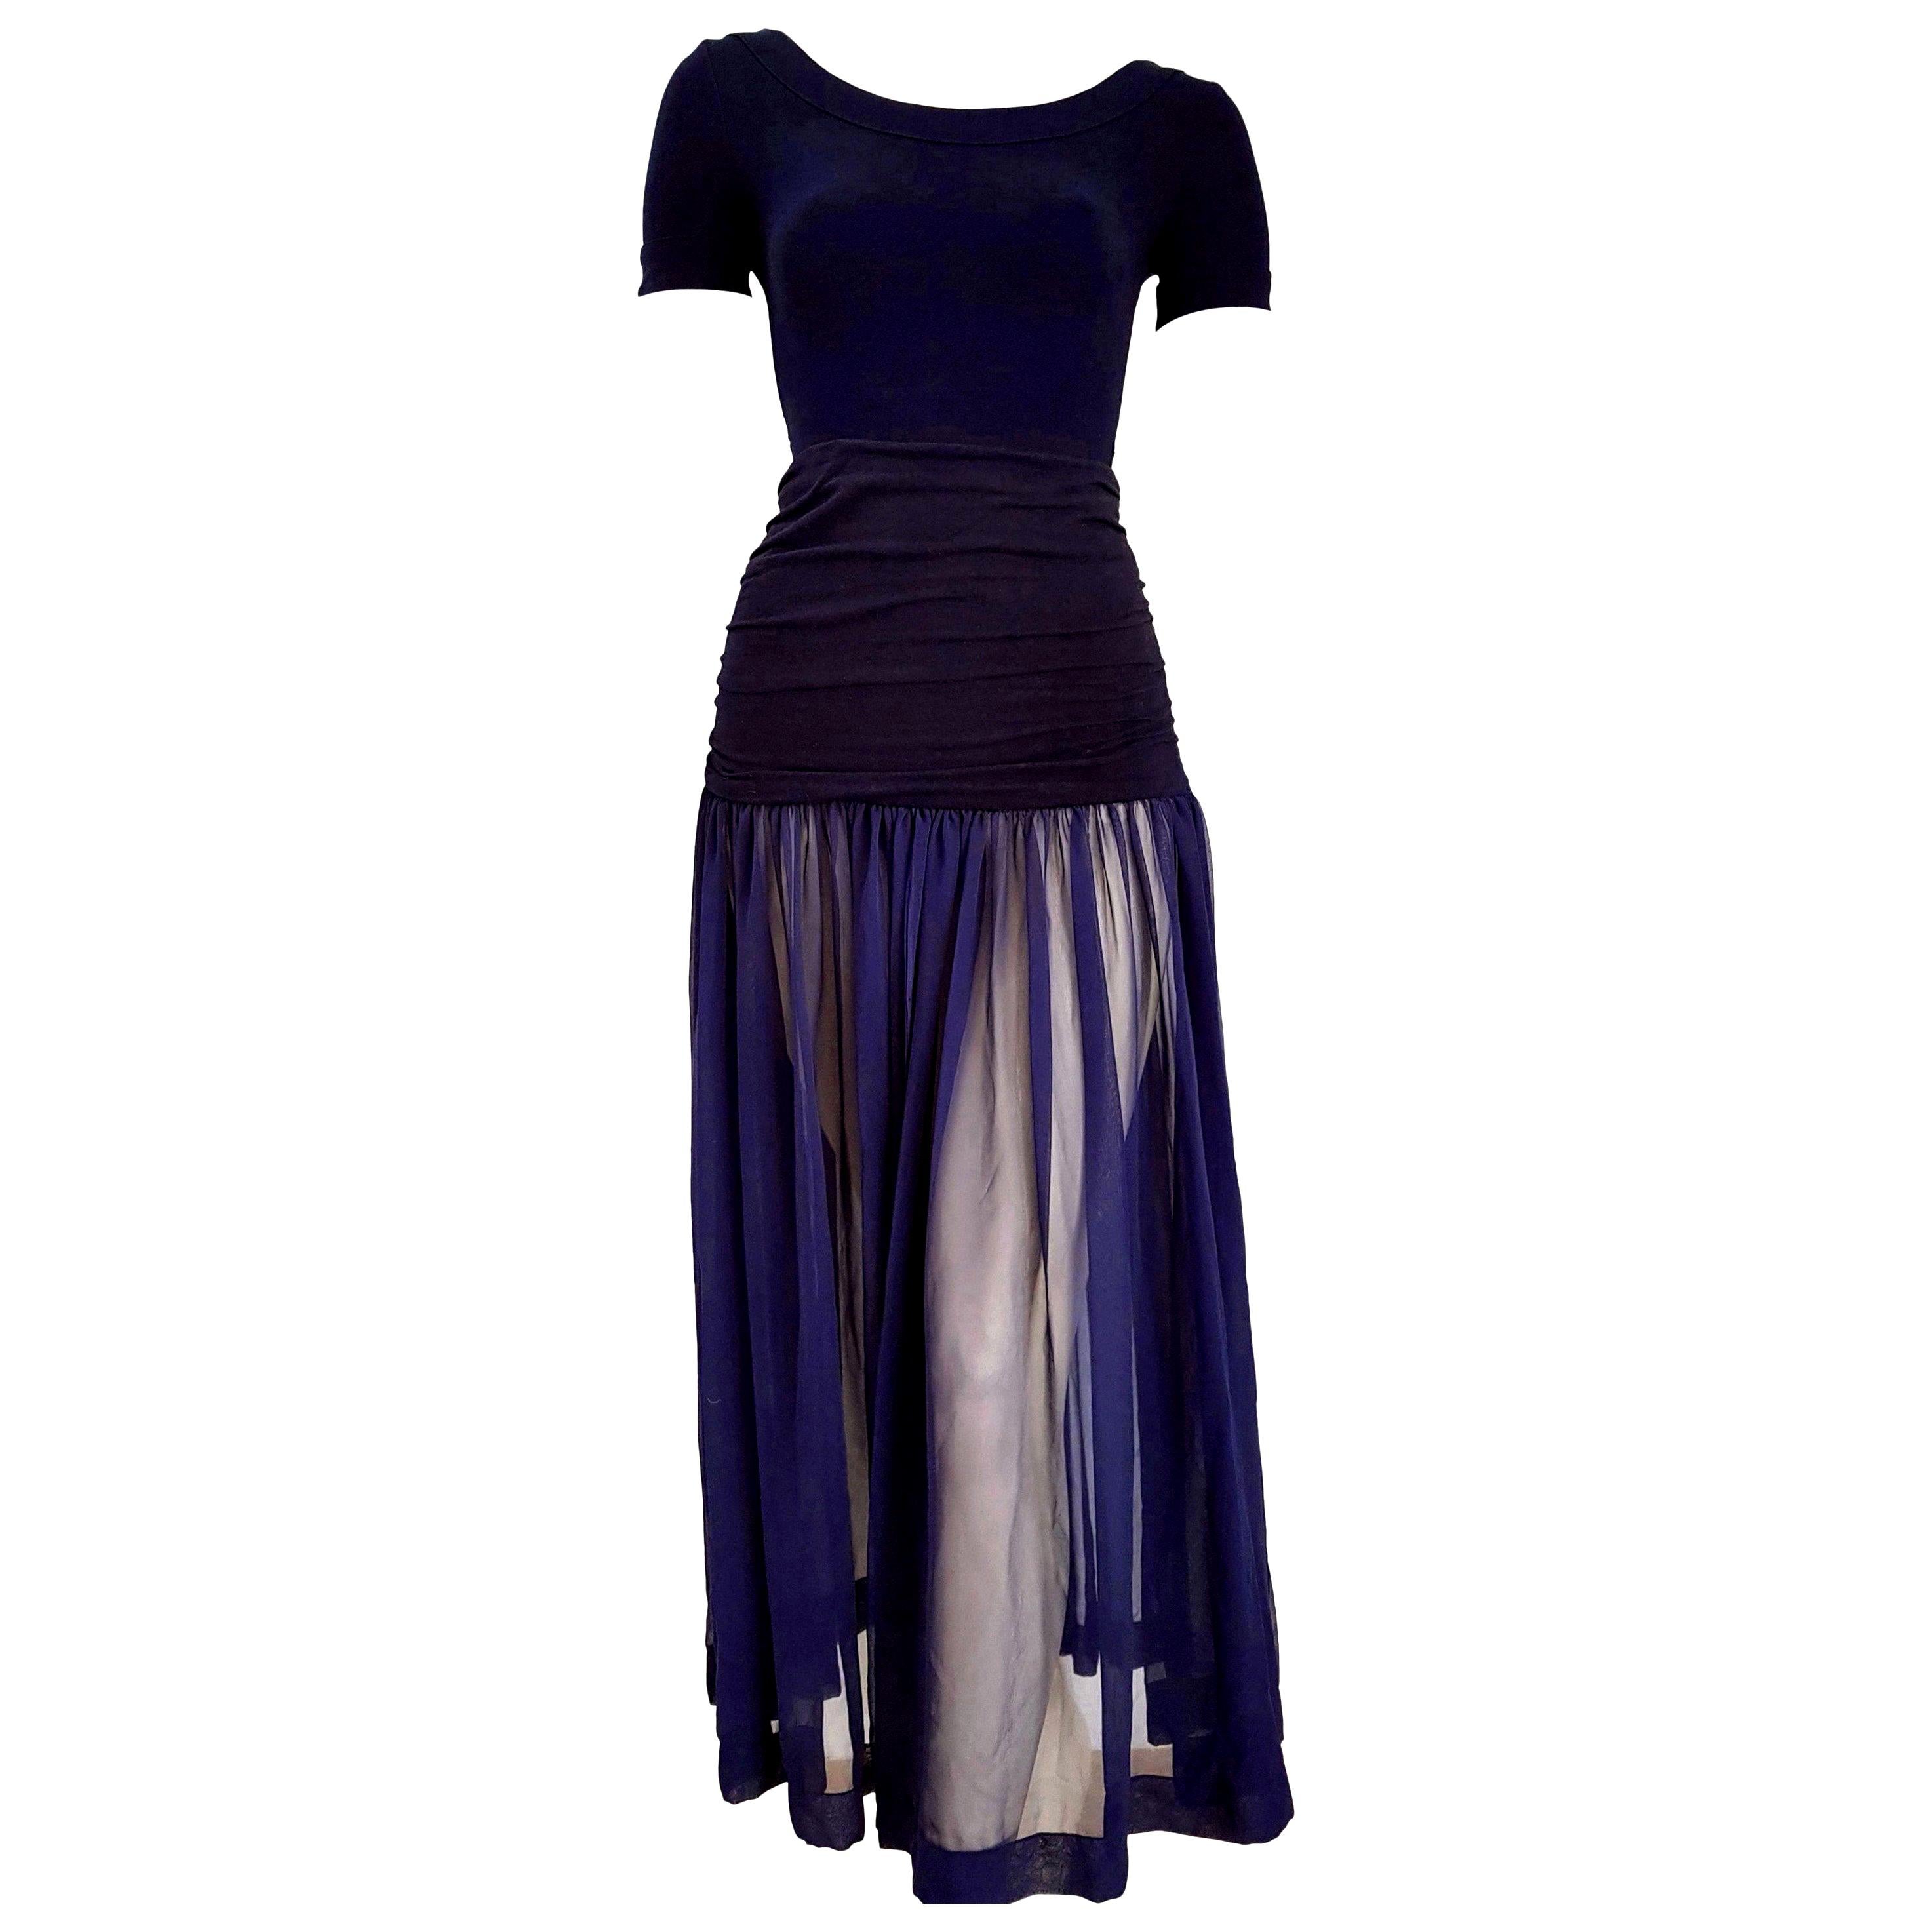 Isabelle ALLARD Paris "New" Couture Blue Body Chiffon Silk Cotton Dress - Unworn For Sale